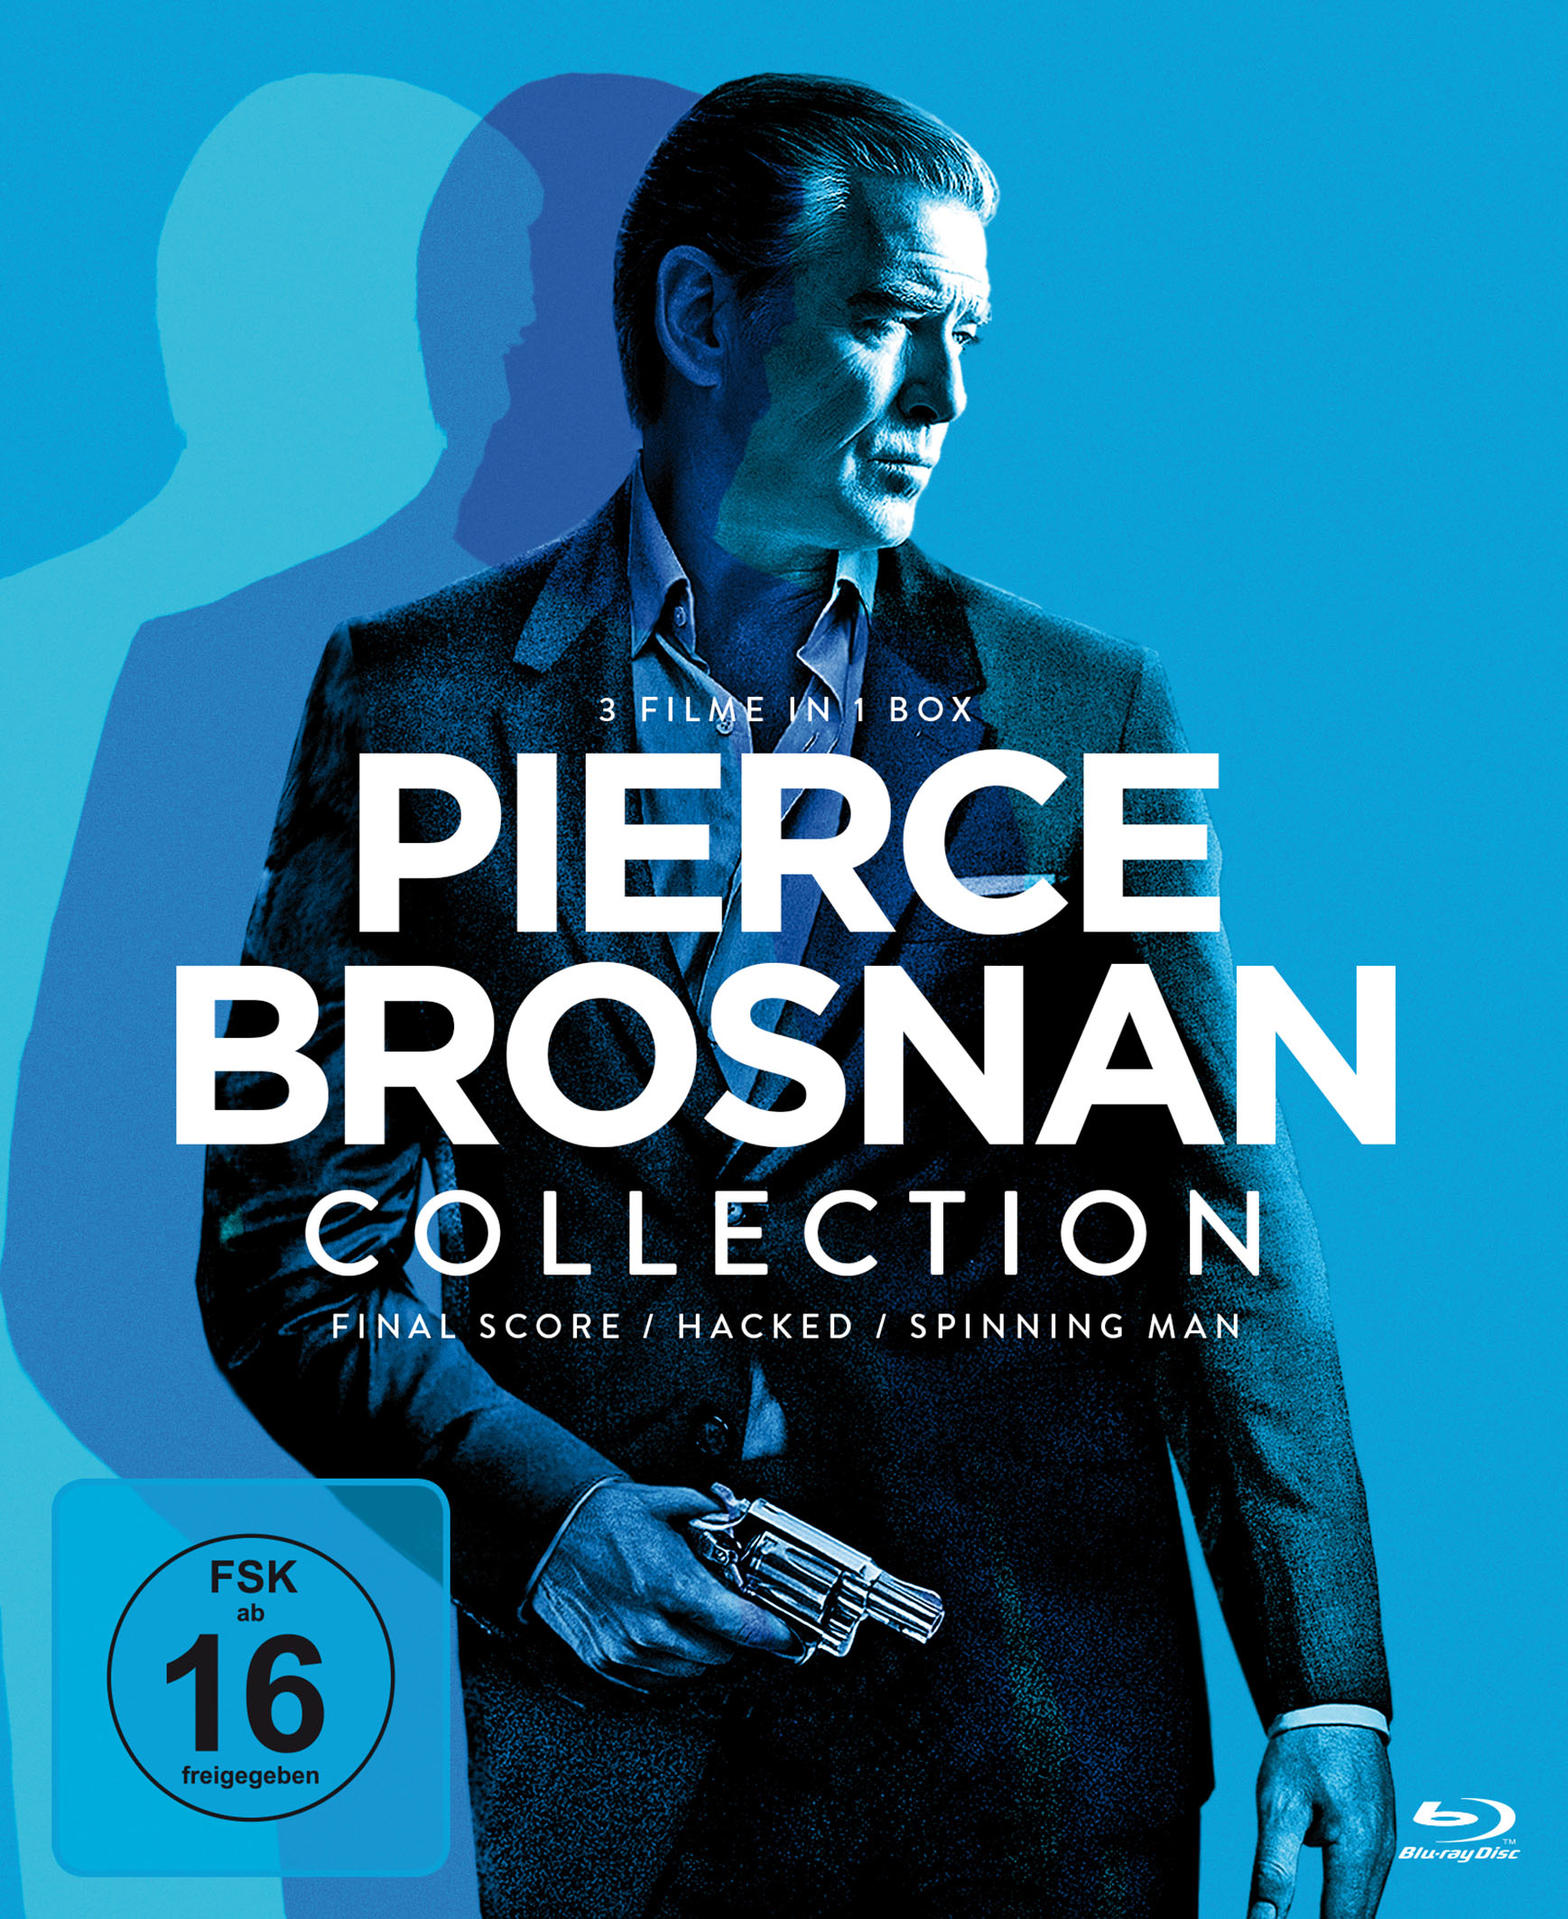 Pierce Brosnan Collection Blu-ray